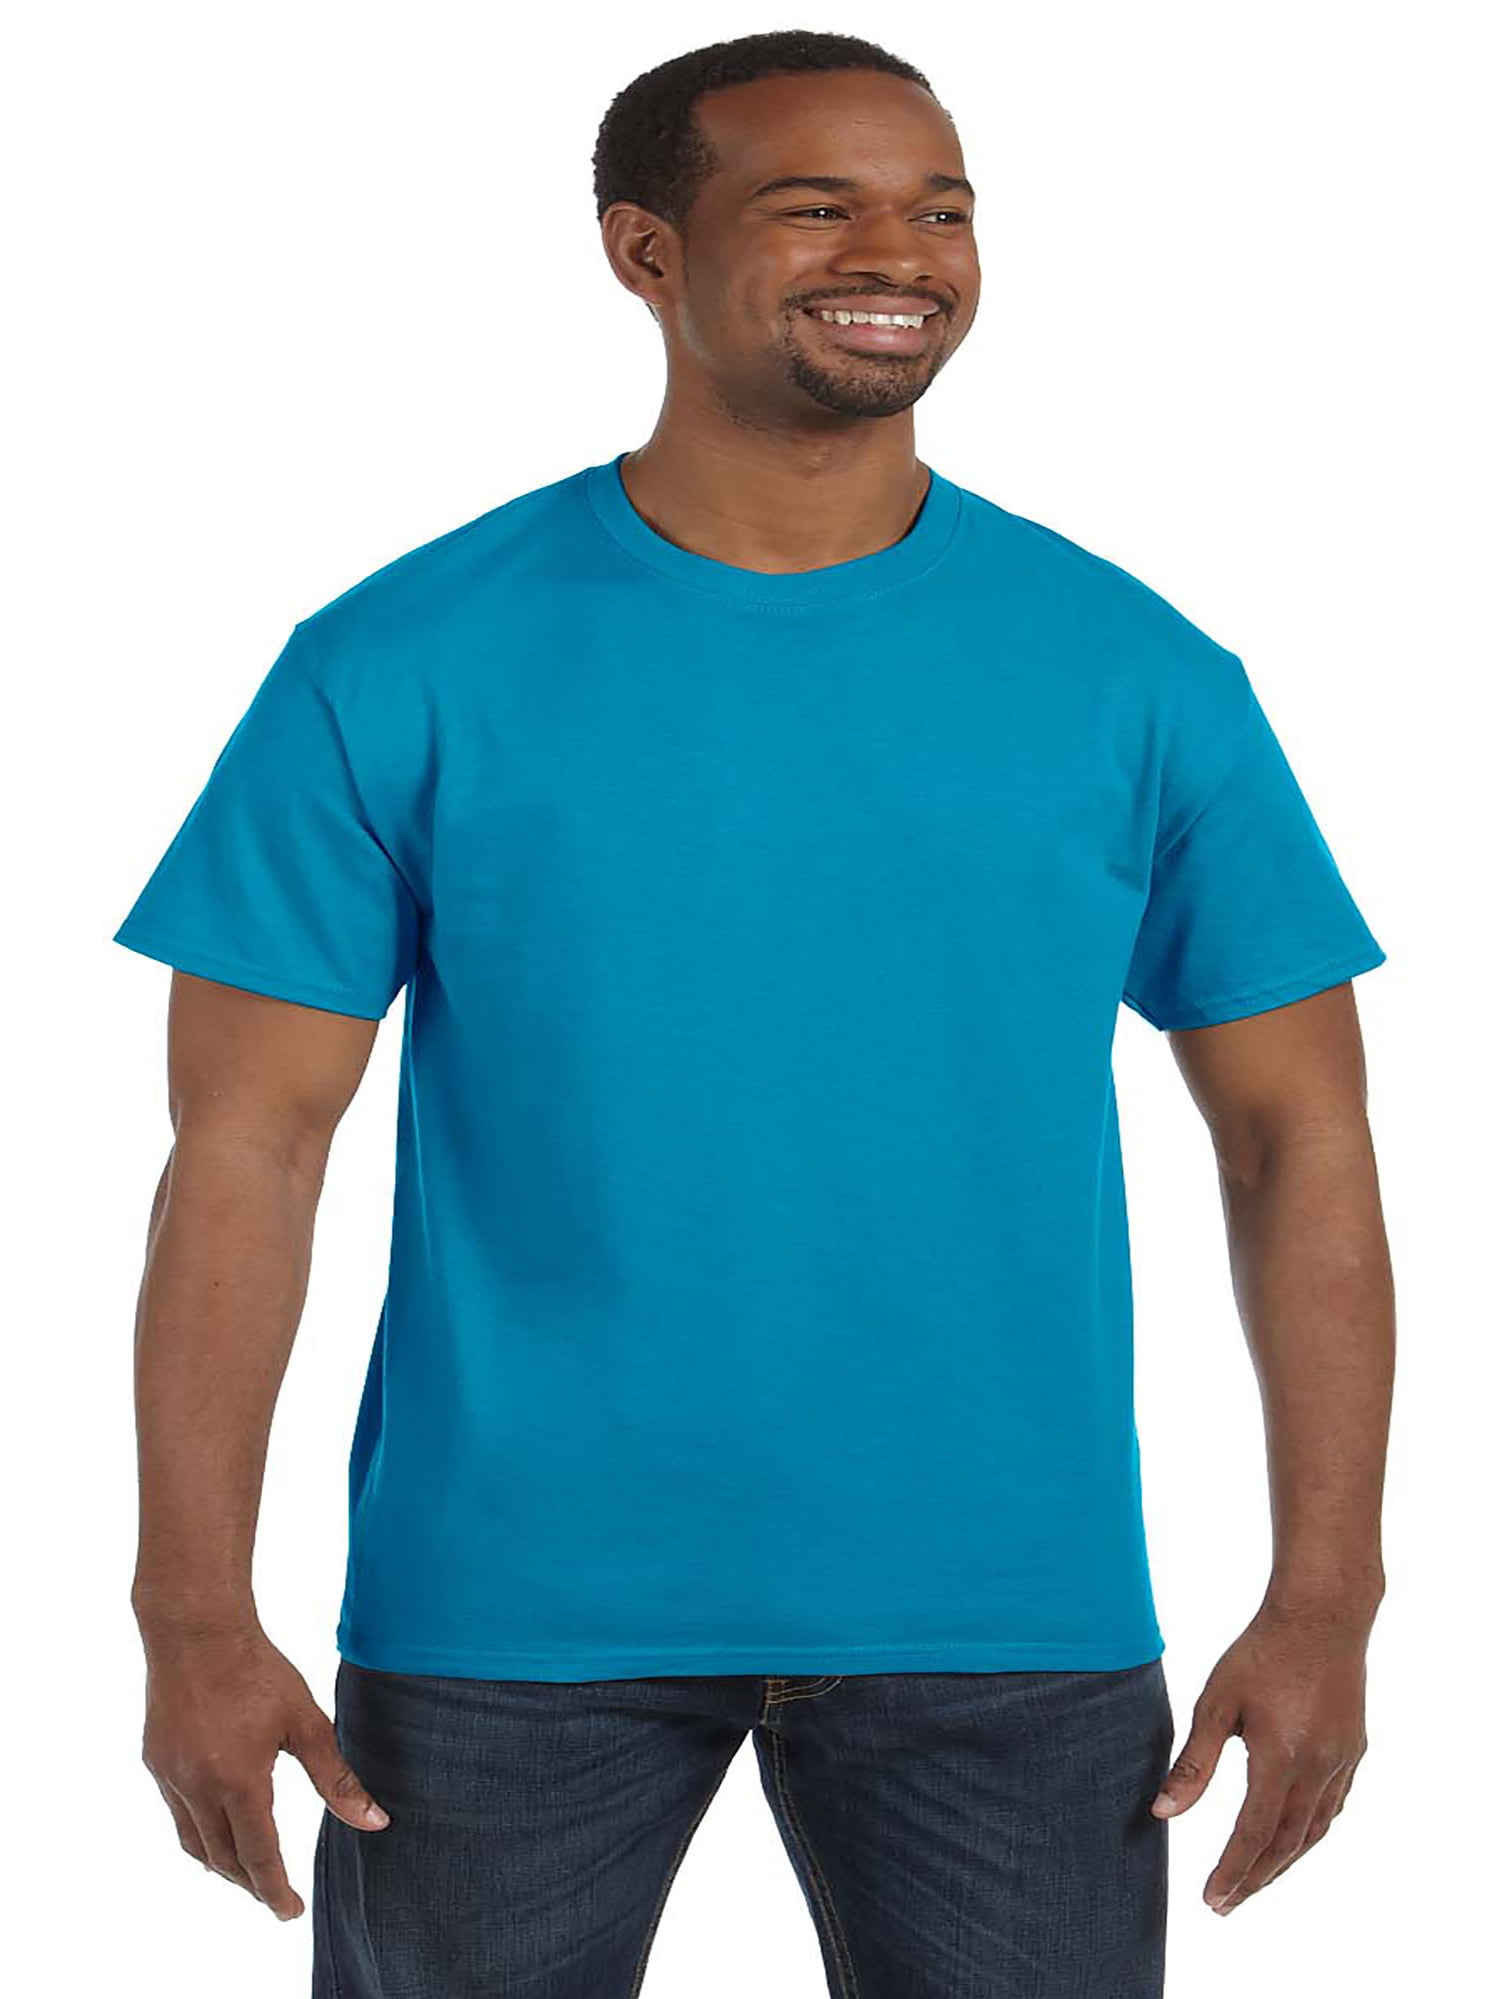 Hanes - Hanes TAGLESS® T-Shirt, Style 5250 - Walmart.com - Walmart.com